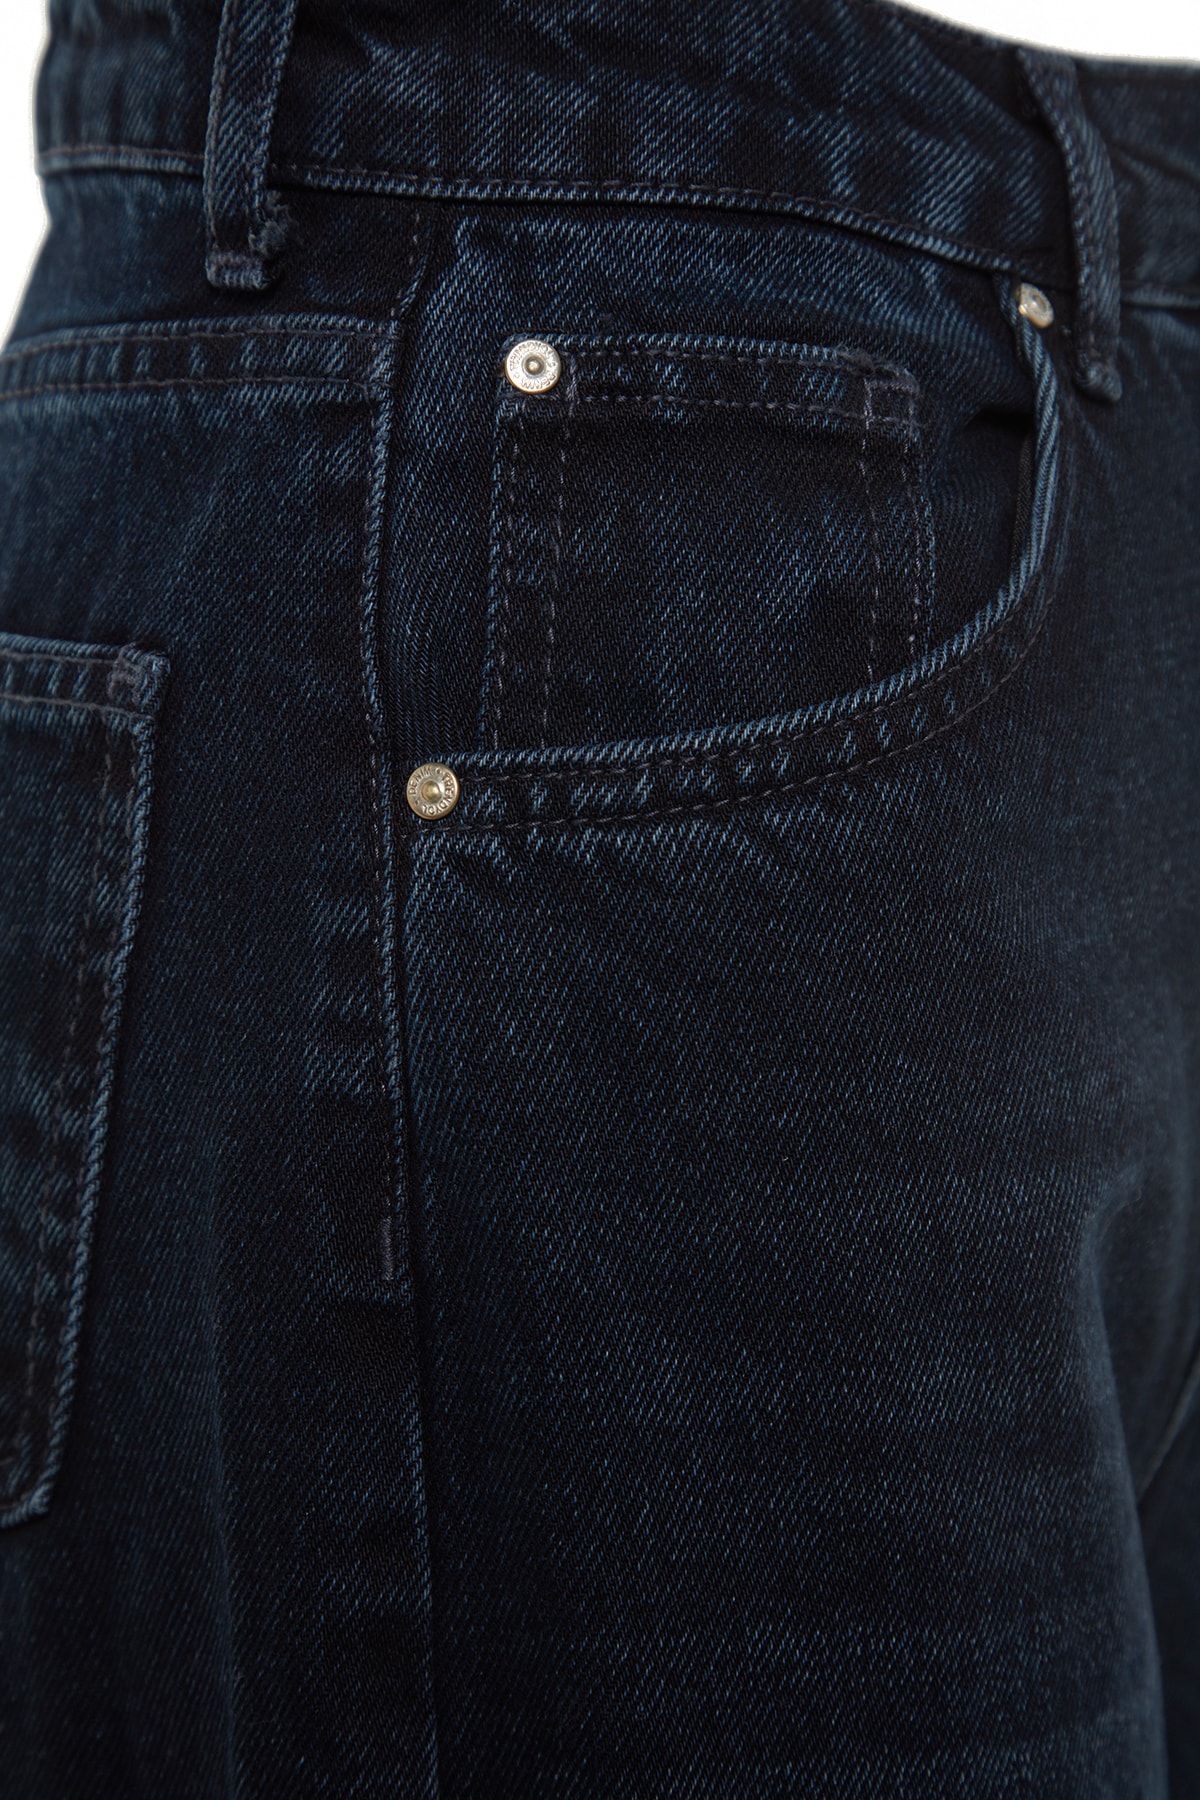 Trendyol Collection Jeans - Dark blue - Wide leg - Trendyol